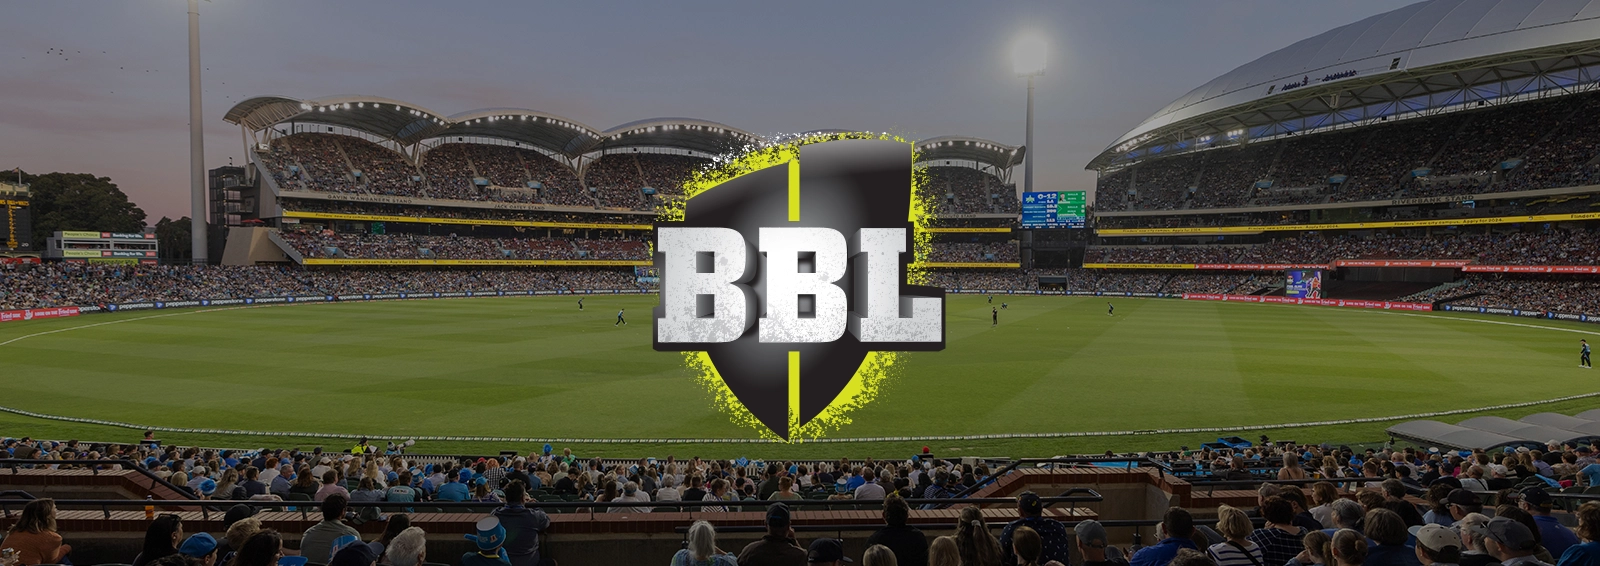 Brand Licensing Group BBL Merchandise - DT